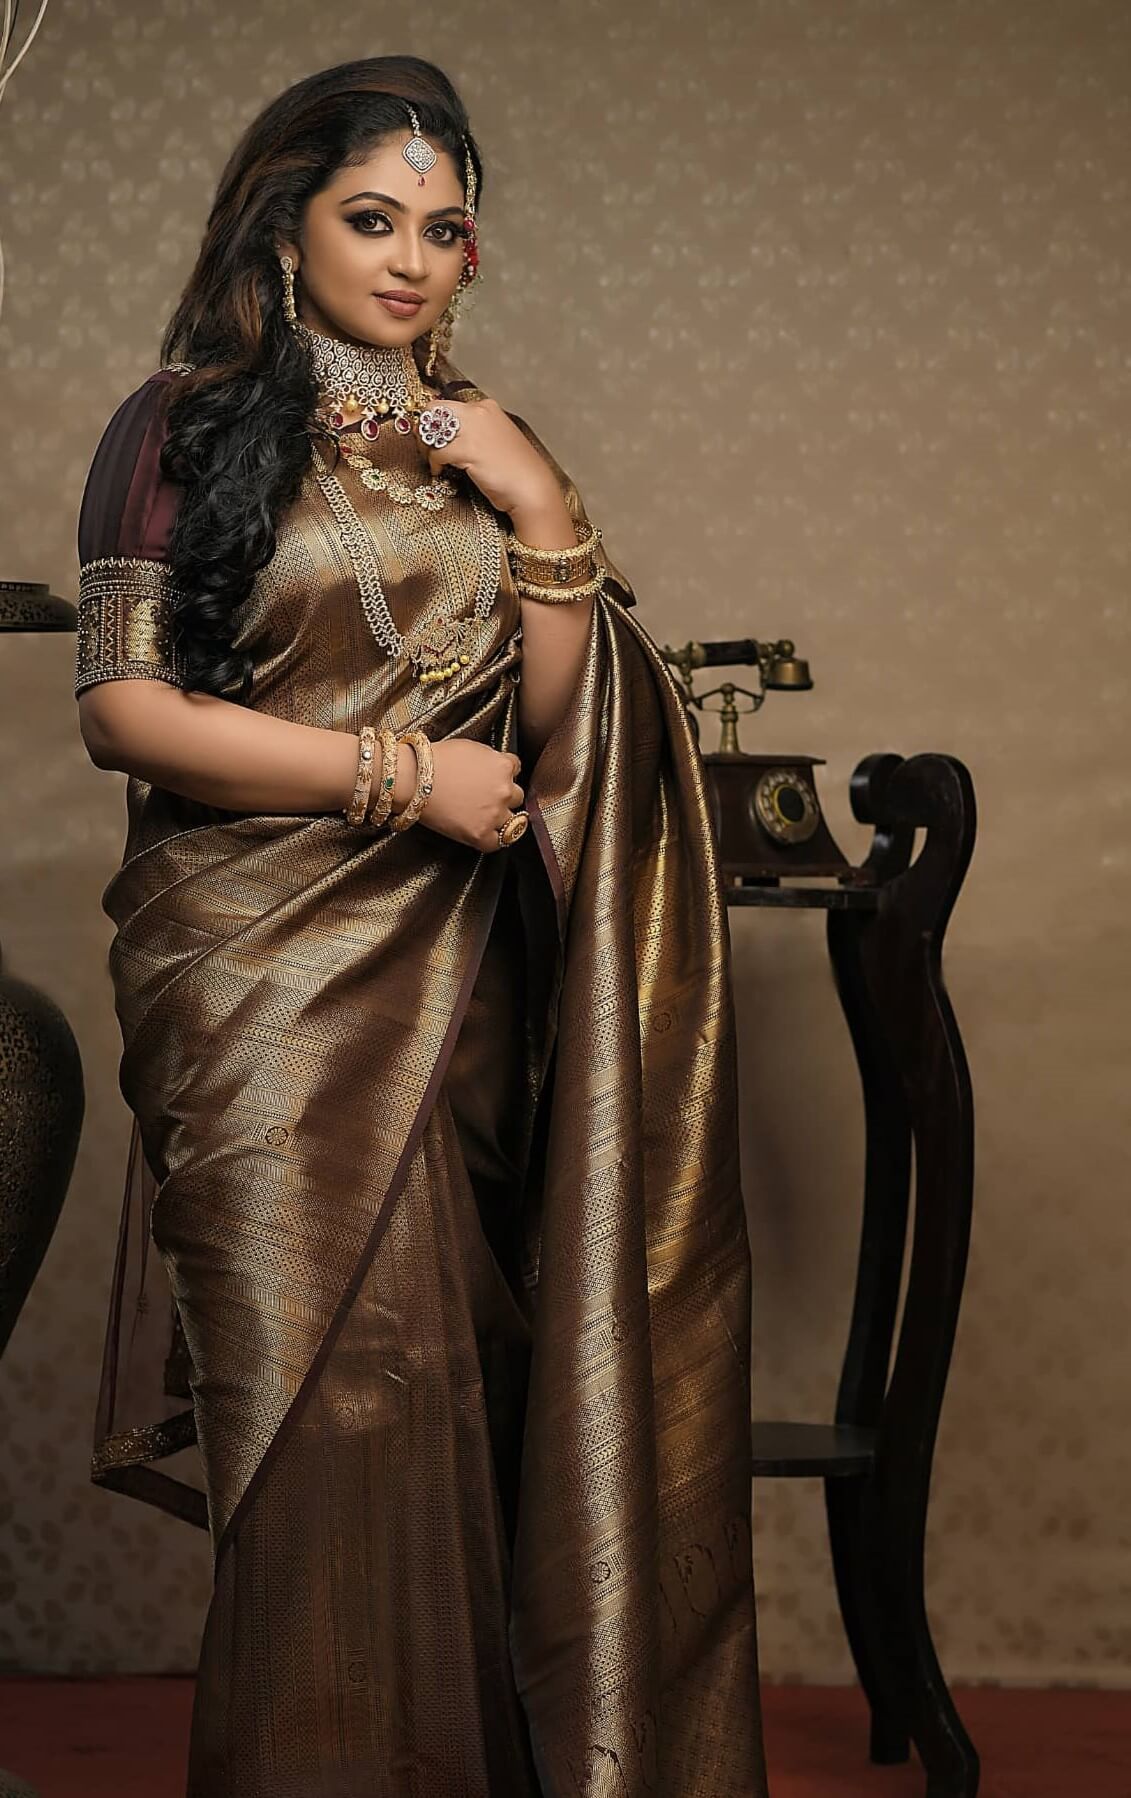 Arundhathi Nair In Look Golden Metallic Silk Saree With Diamond Jewellery Perfect Bridal Reception Look